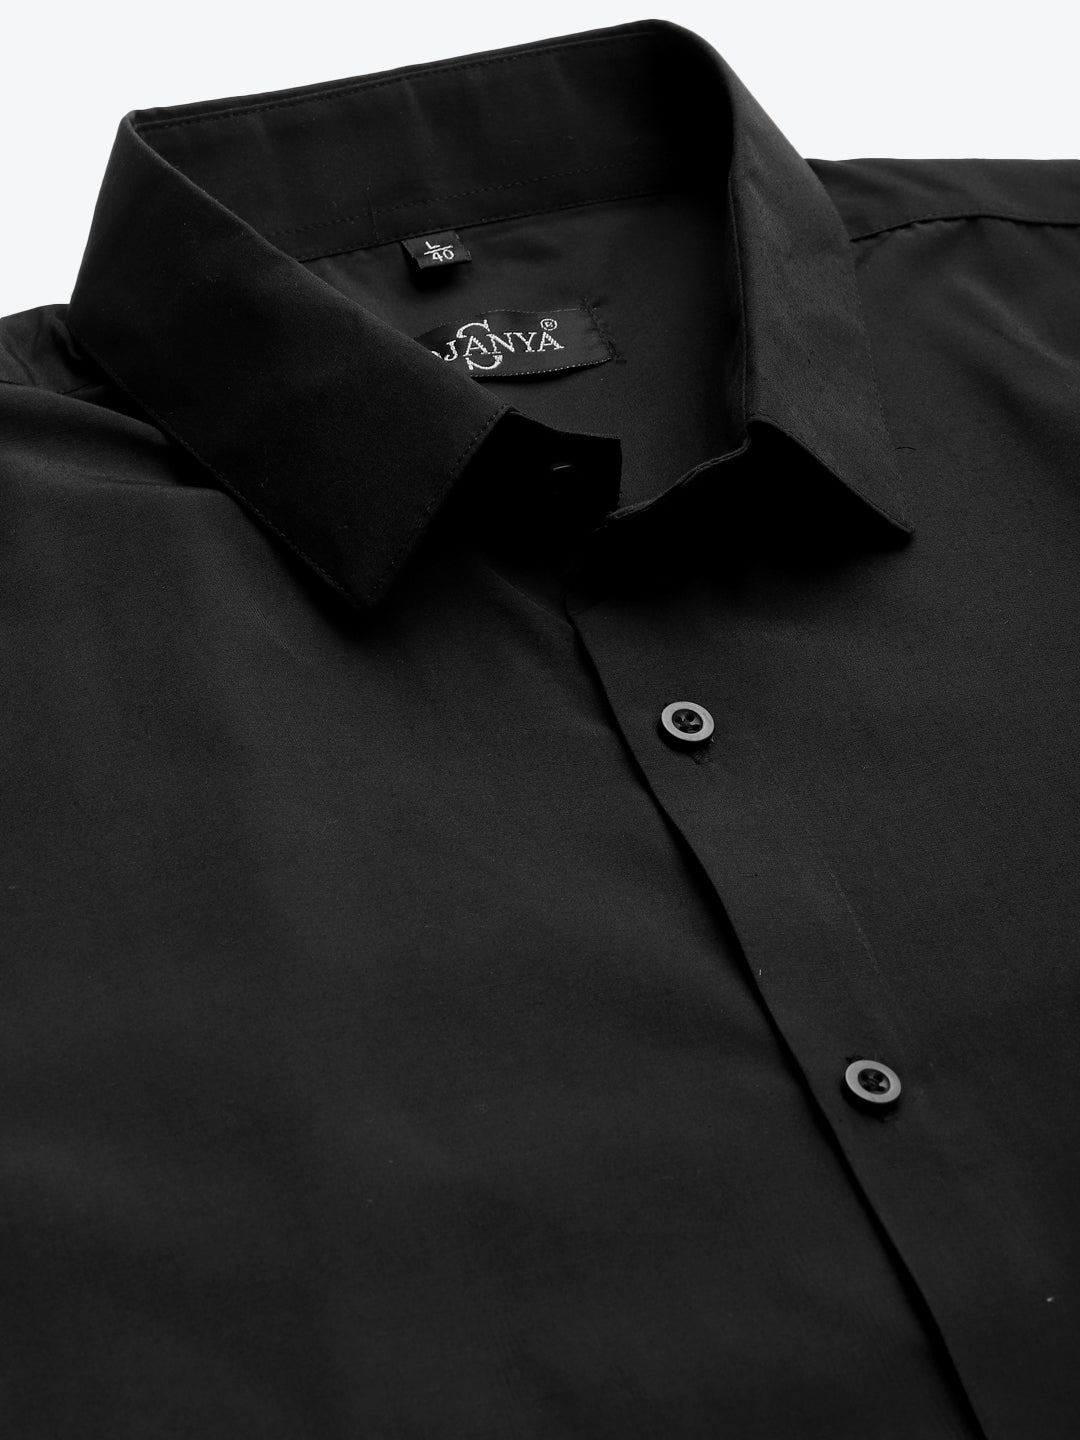 Men's Cotton Black Half sleeves Casual Shirt